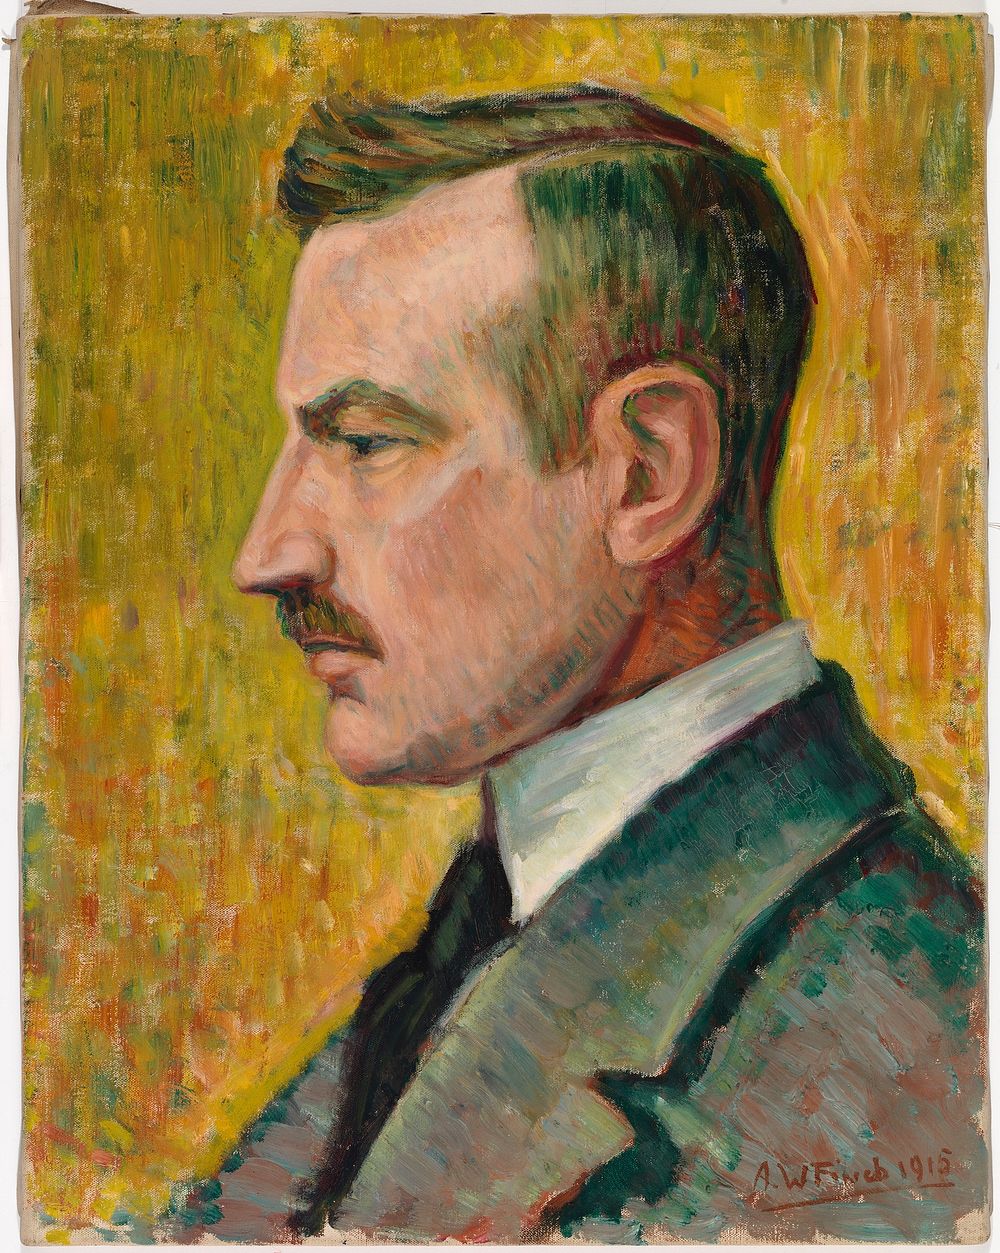 Portrait of artist magnus enckell, 1915, by Alfred William Finch